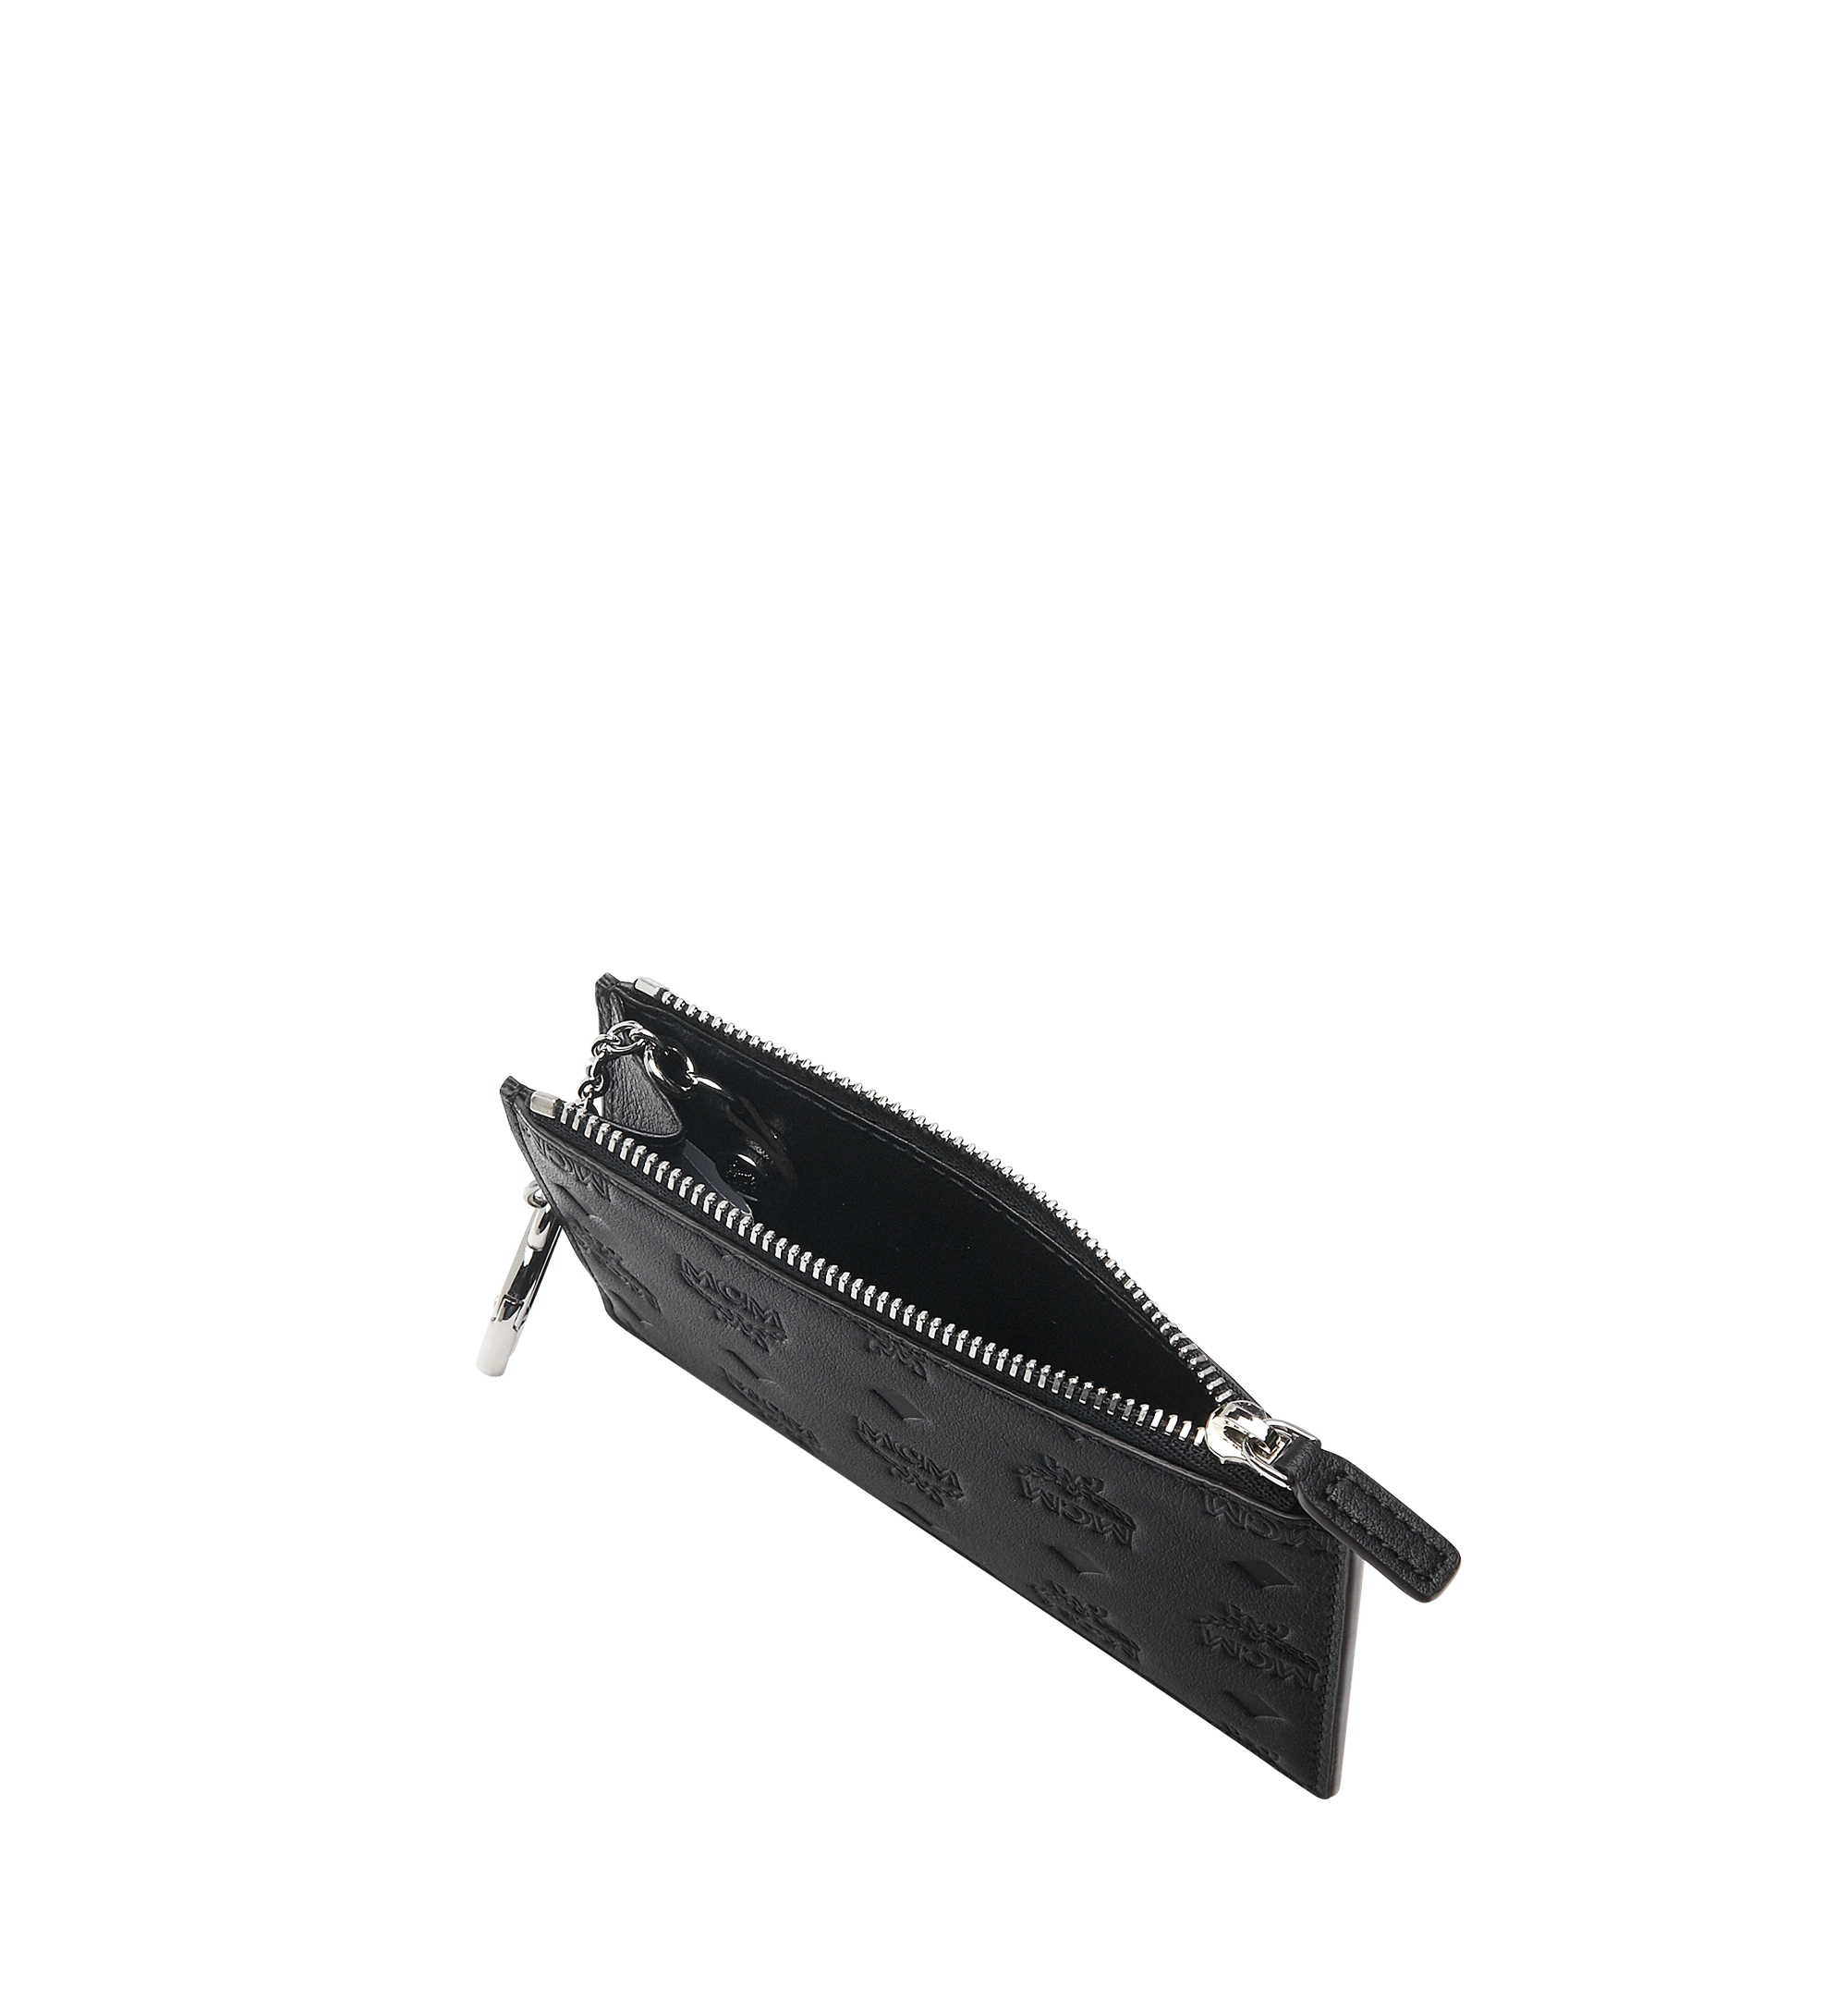 Mano men´s leather key purse - black